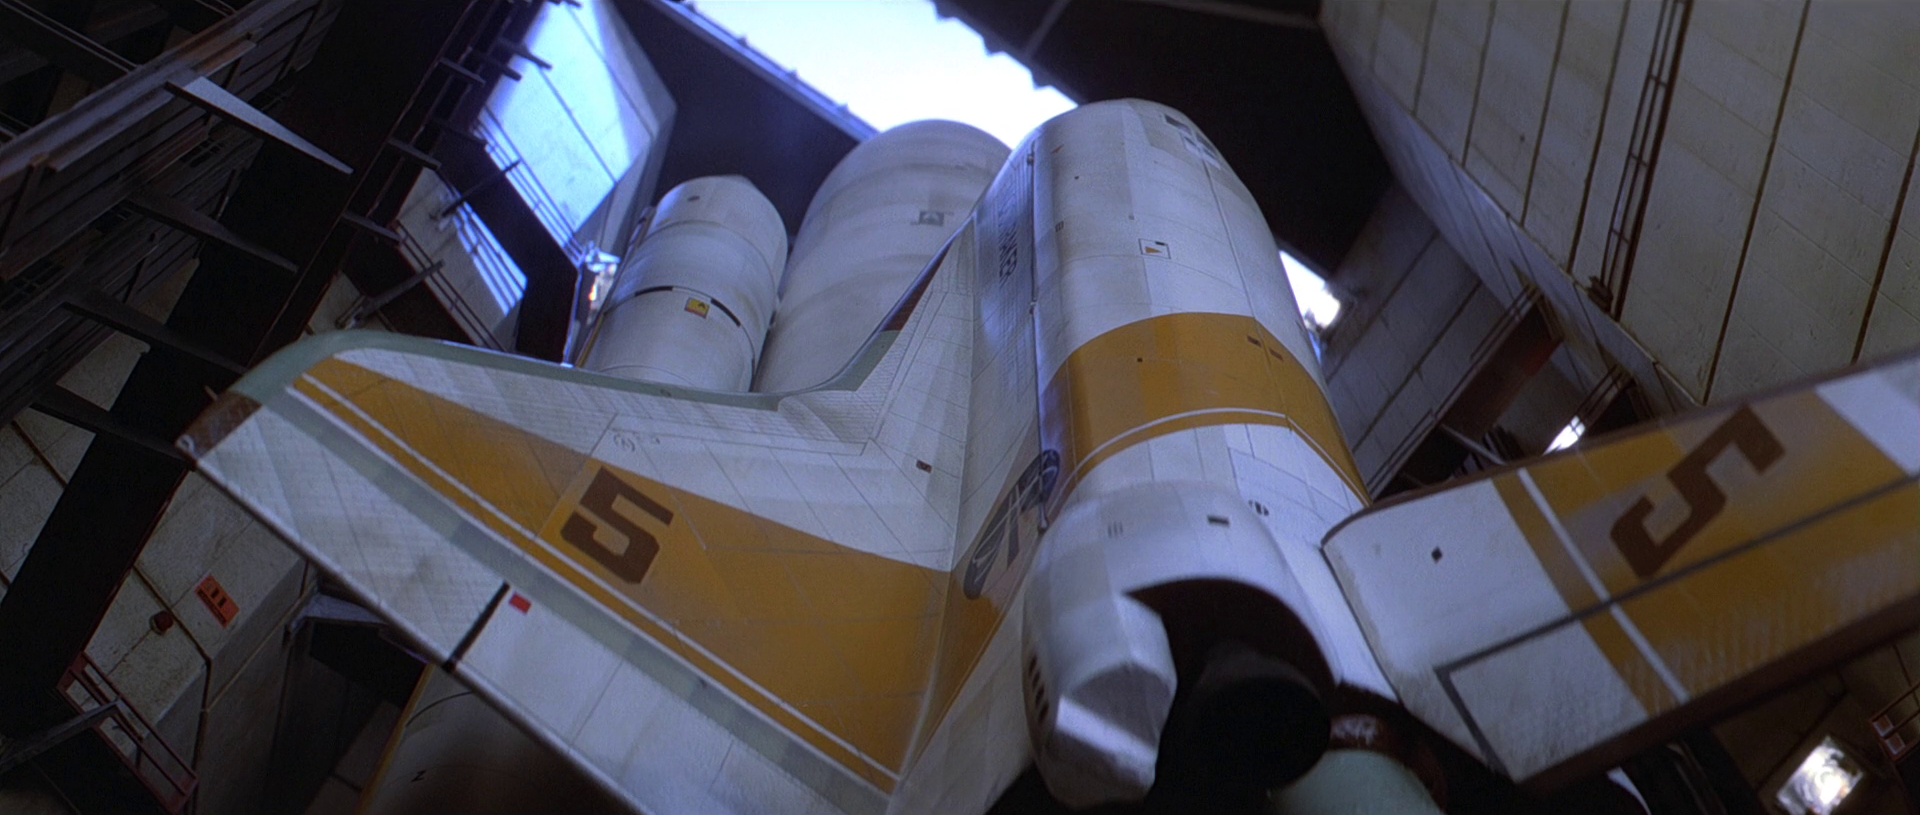 Moonraker (Space Shuttle) | James Bond Wiki | FANDOM ...